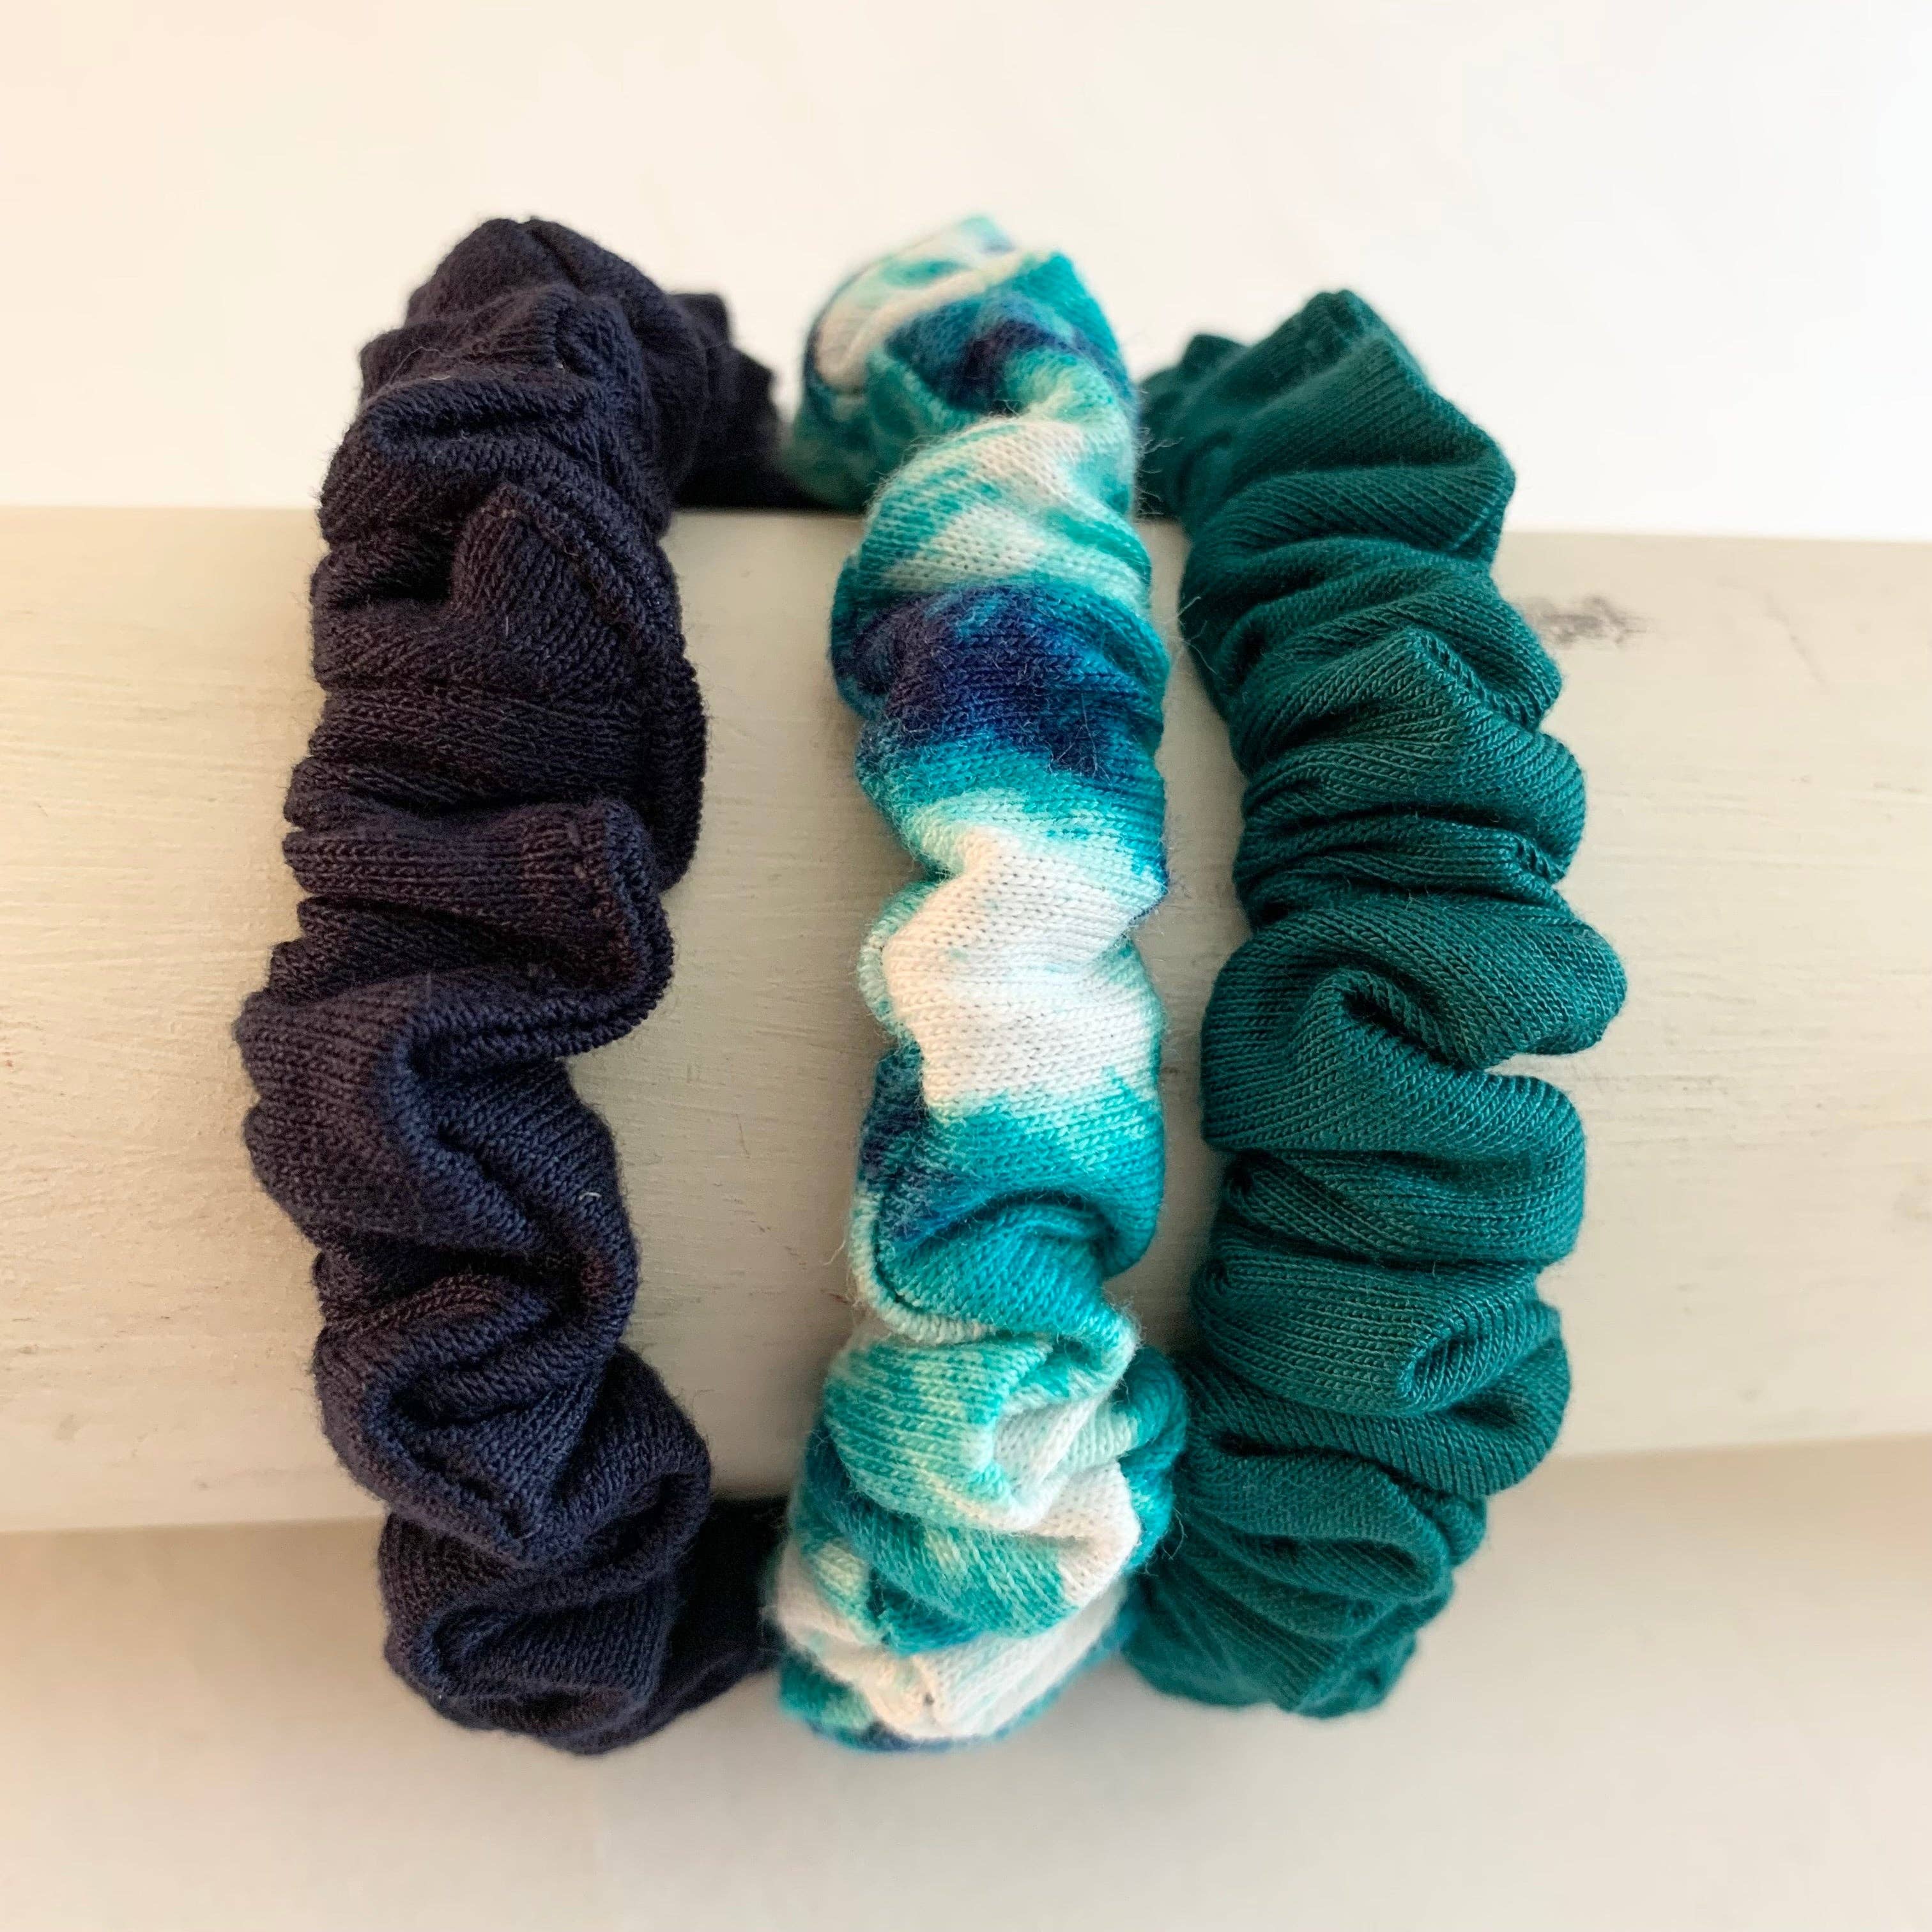 Mini Scrunchie Set- Assorted Colors/Patterns